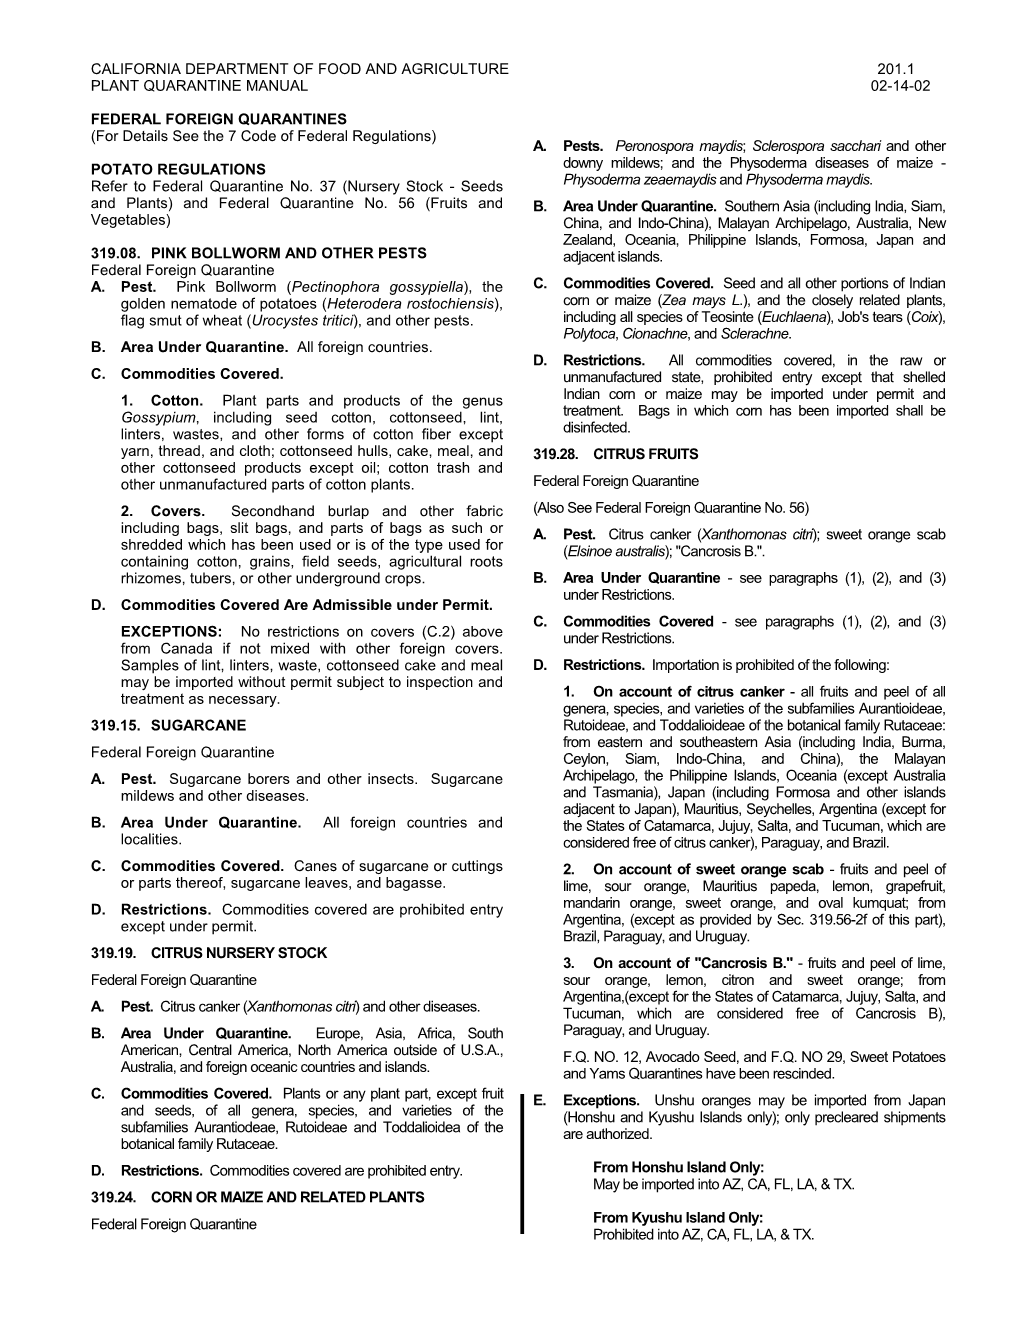 California Department of Food and Agriculture 201.1 Plant Quarantine Manual 02-14-02